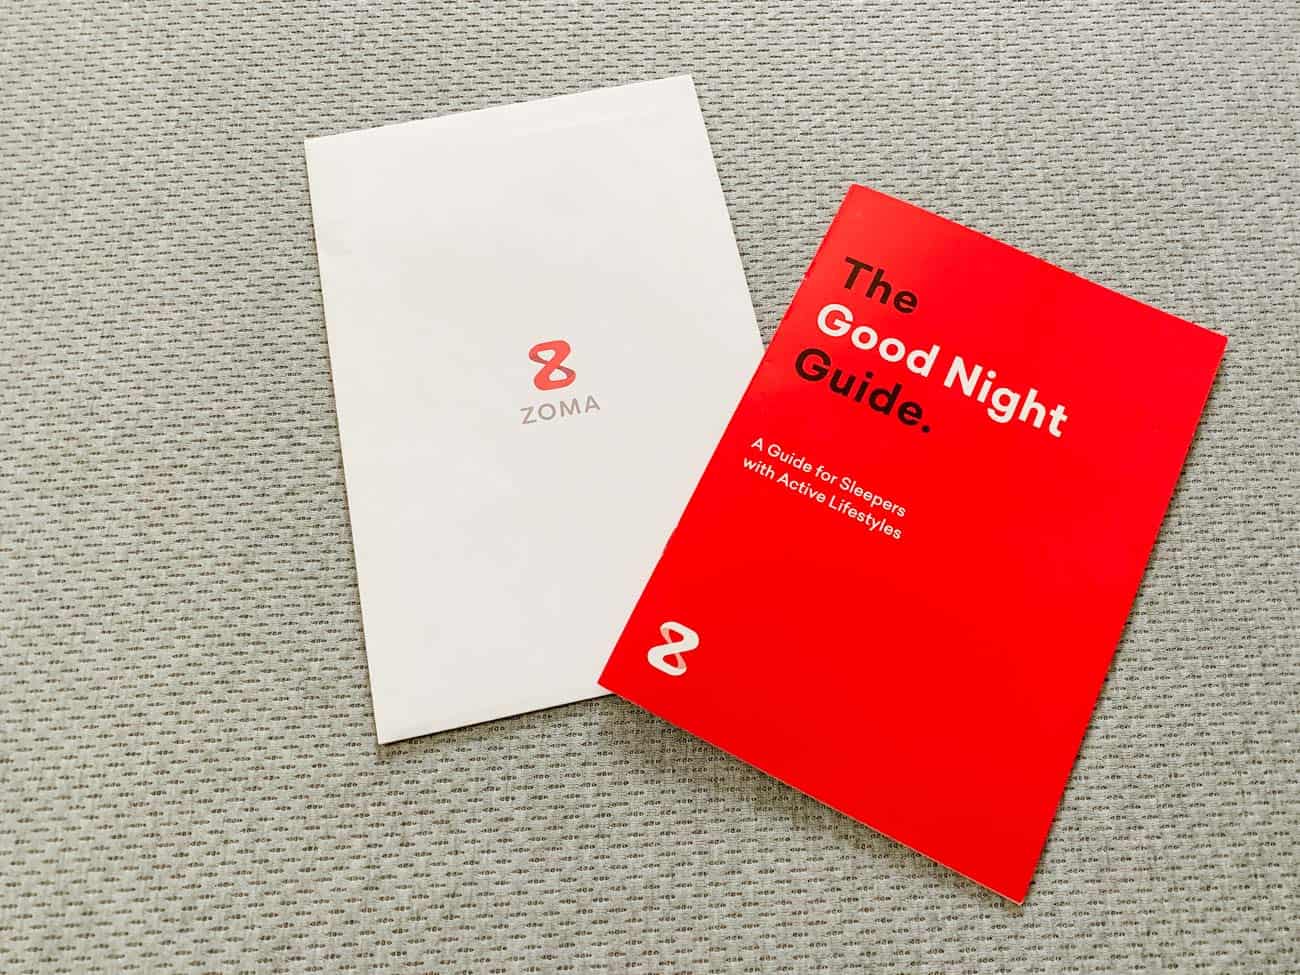 Zoma good sleep guide pamphlet on mattress